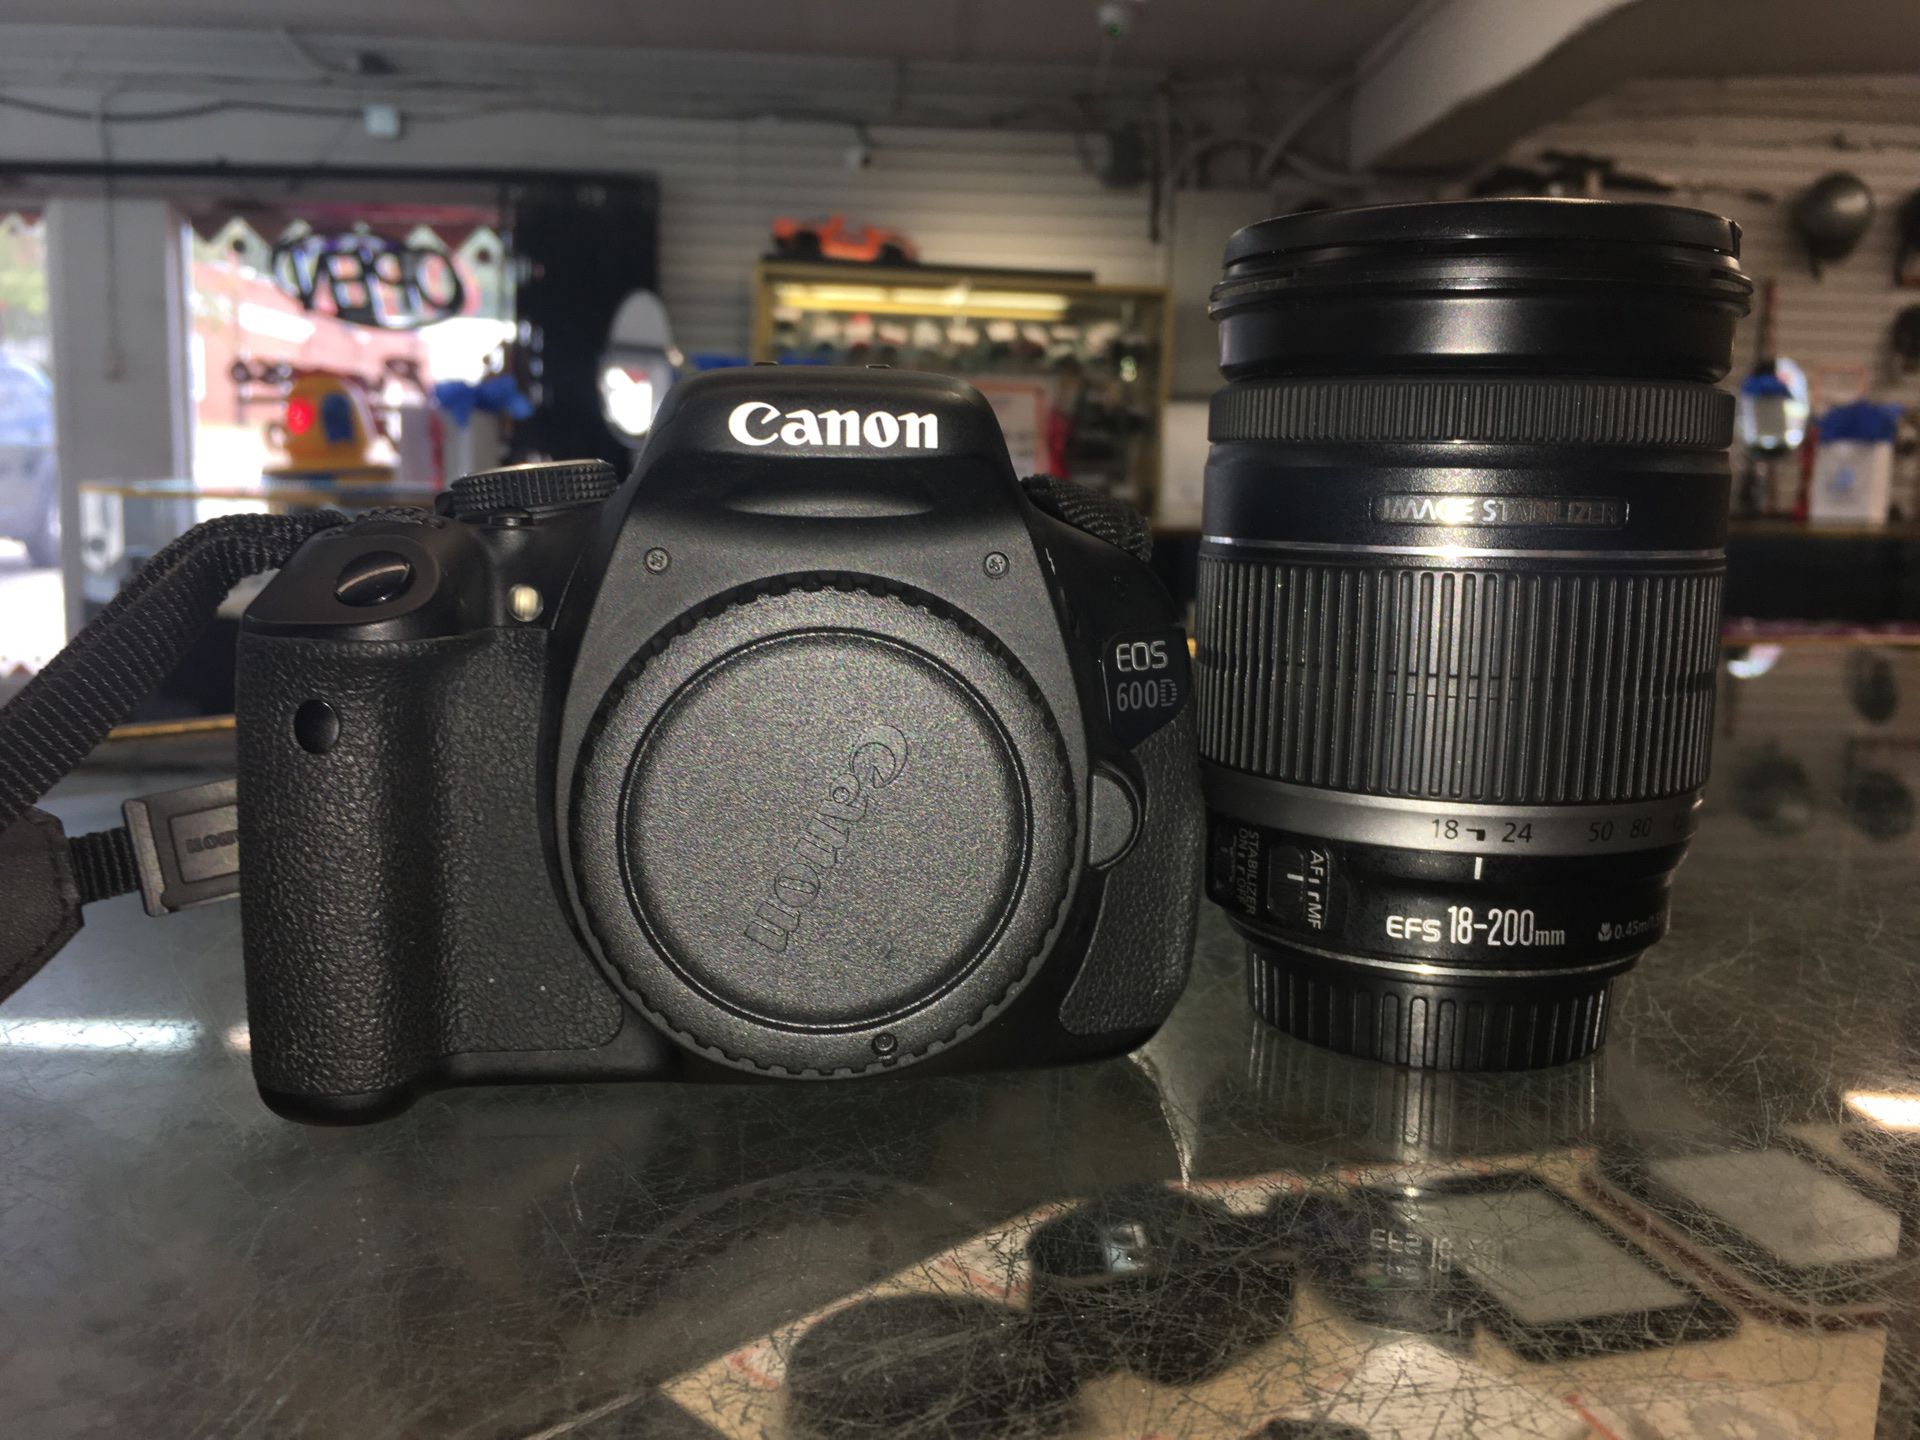 Canon E05-600D Digital Camera with 18-200mm Lens